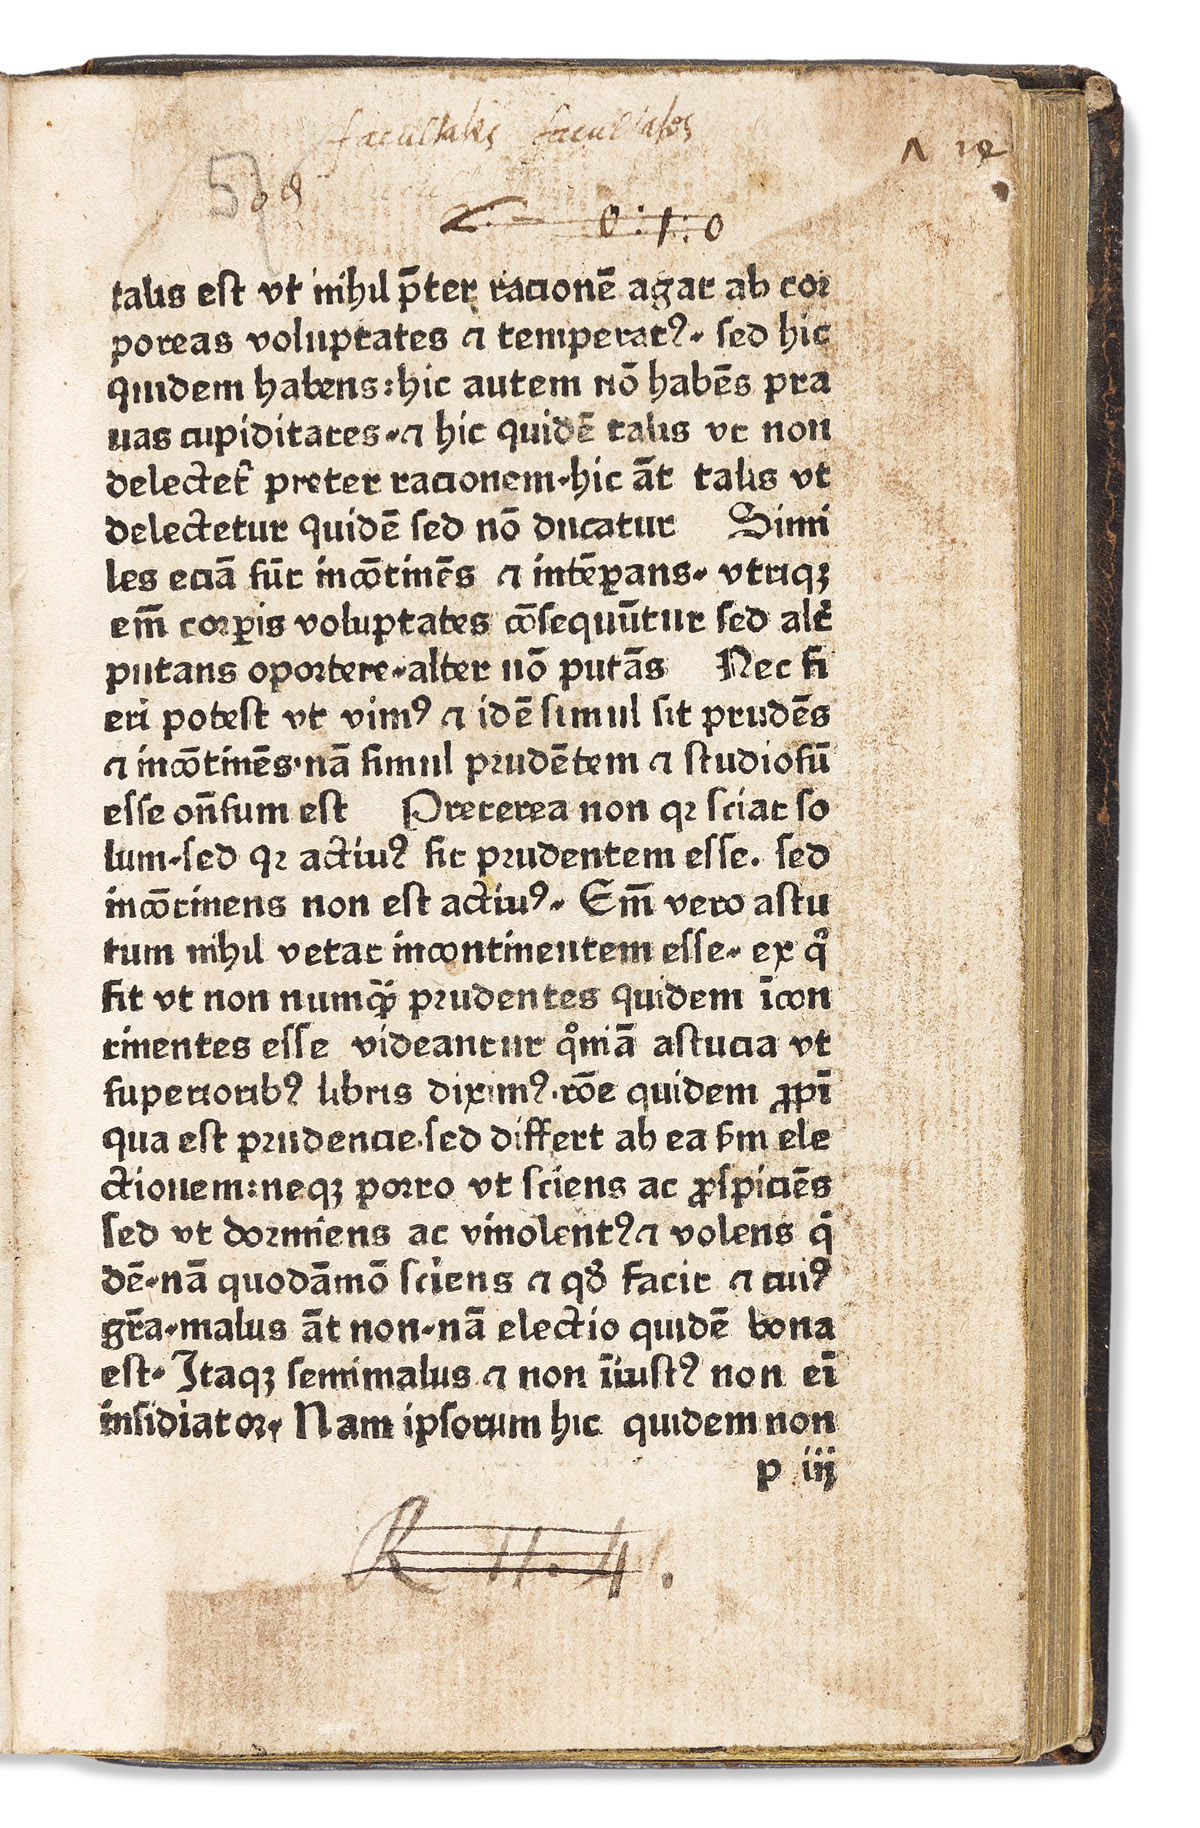 Velleius Paterculuss Animadversionibus. [Together with] three leaves from Aristotles Libri Ethicorum printed in Oxford, 1479.